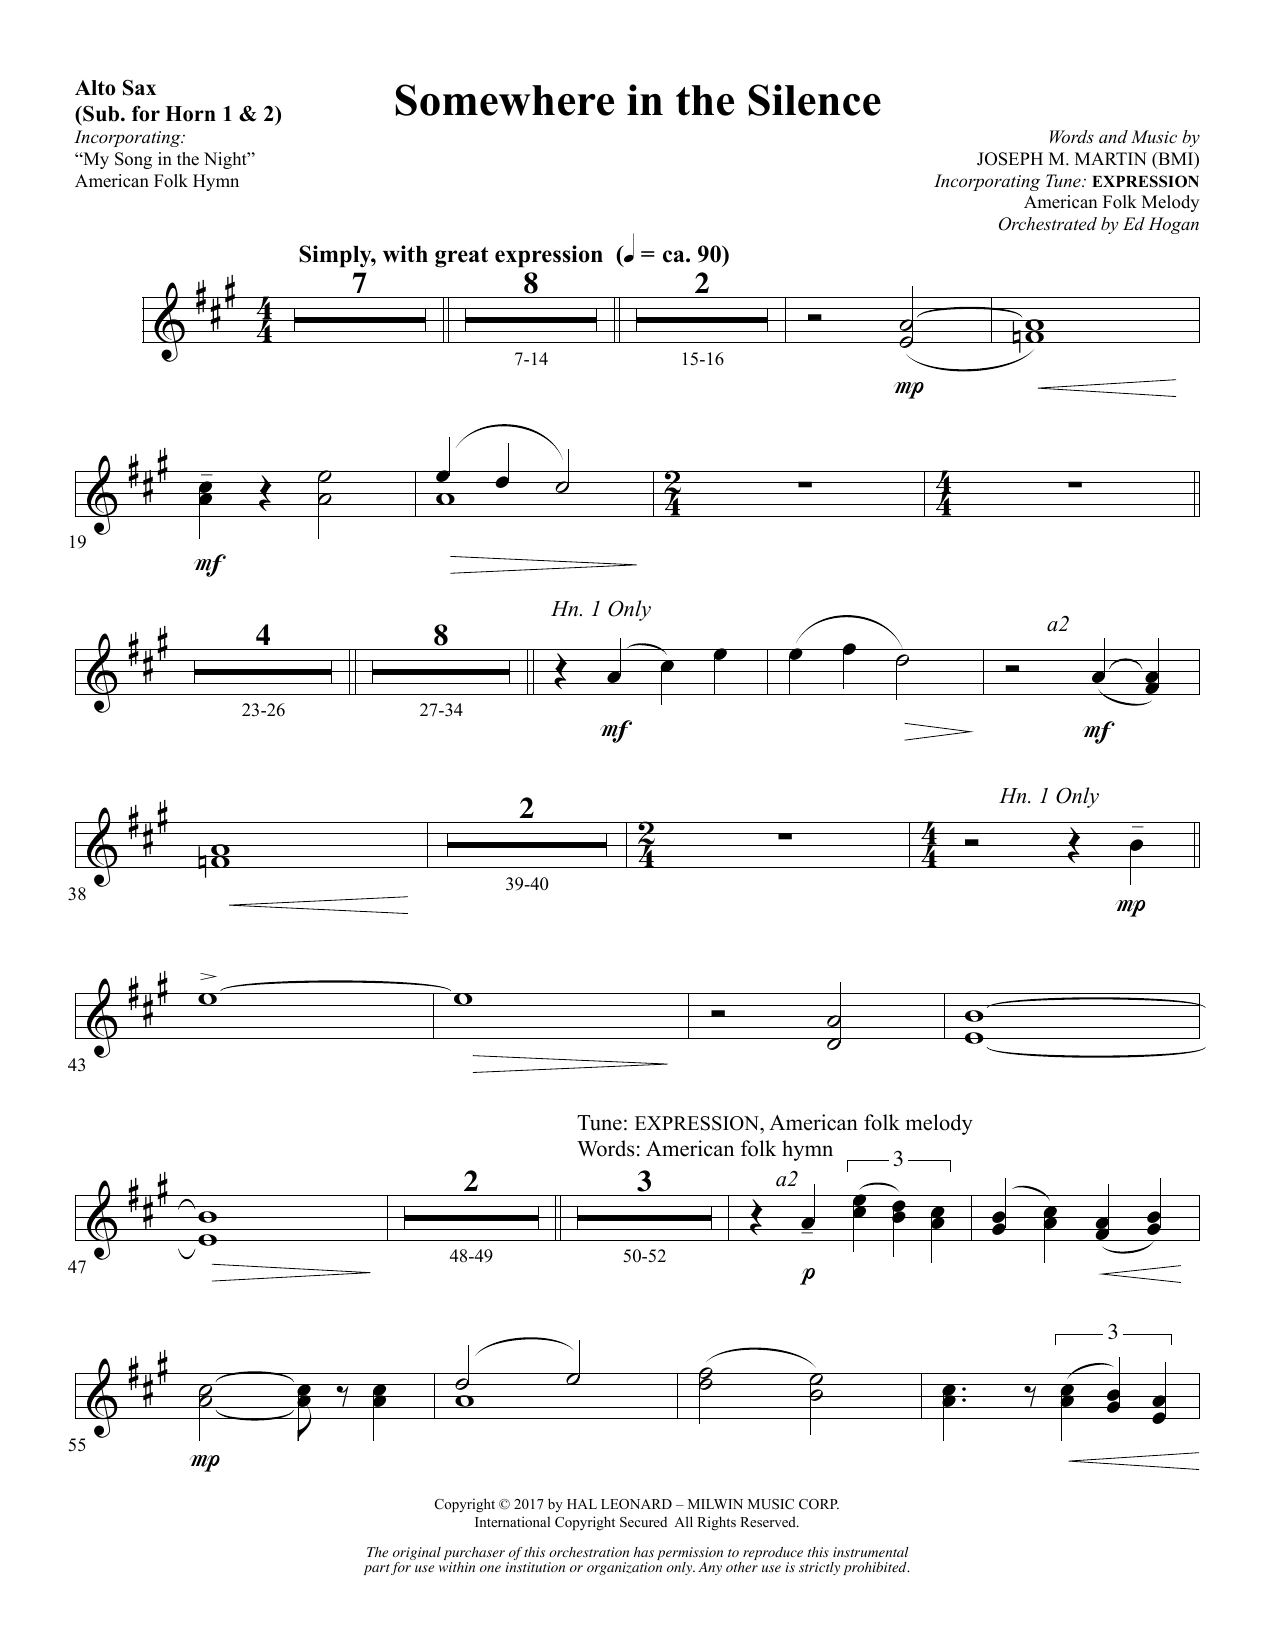 Download Joseph M. Martin Somewhere in the Silence - Alto Sax 1-2 Sheet Music